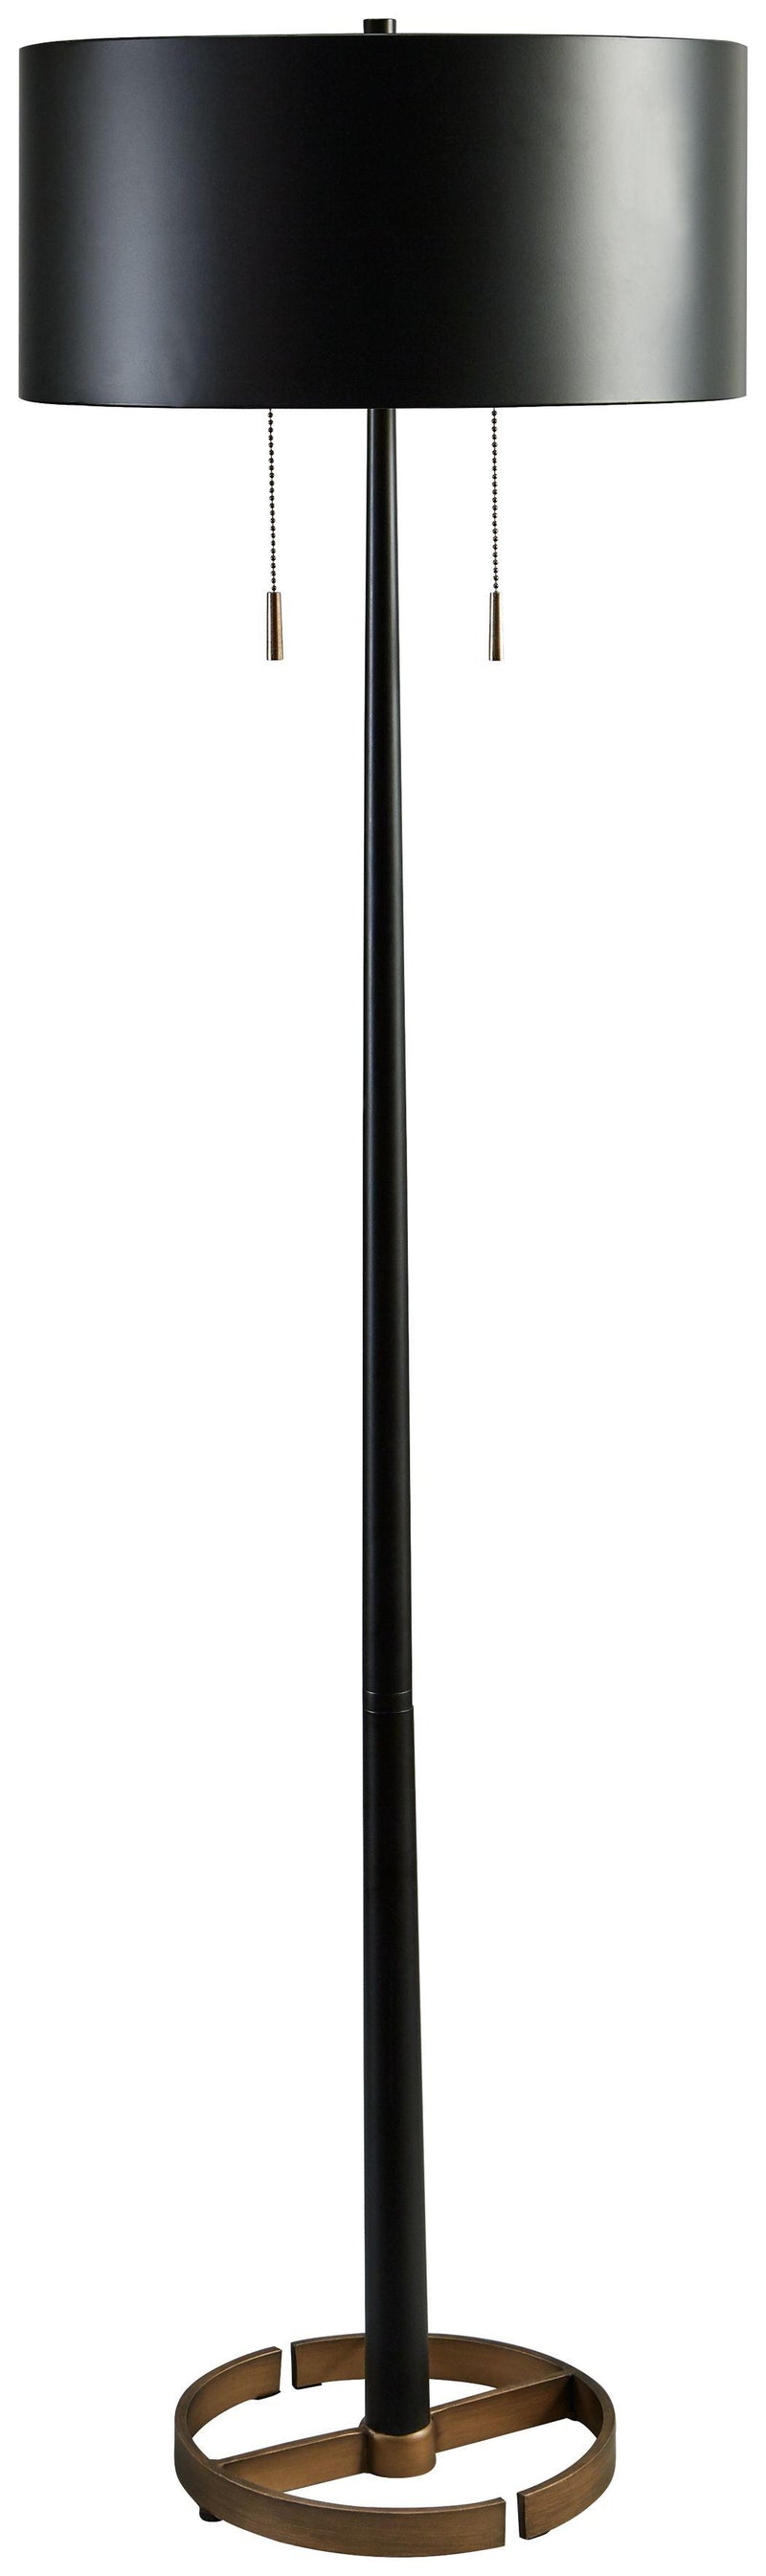 Amadell - Metal Lamp (1/cn) image